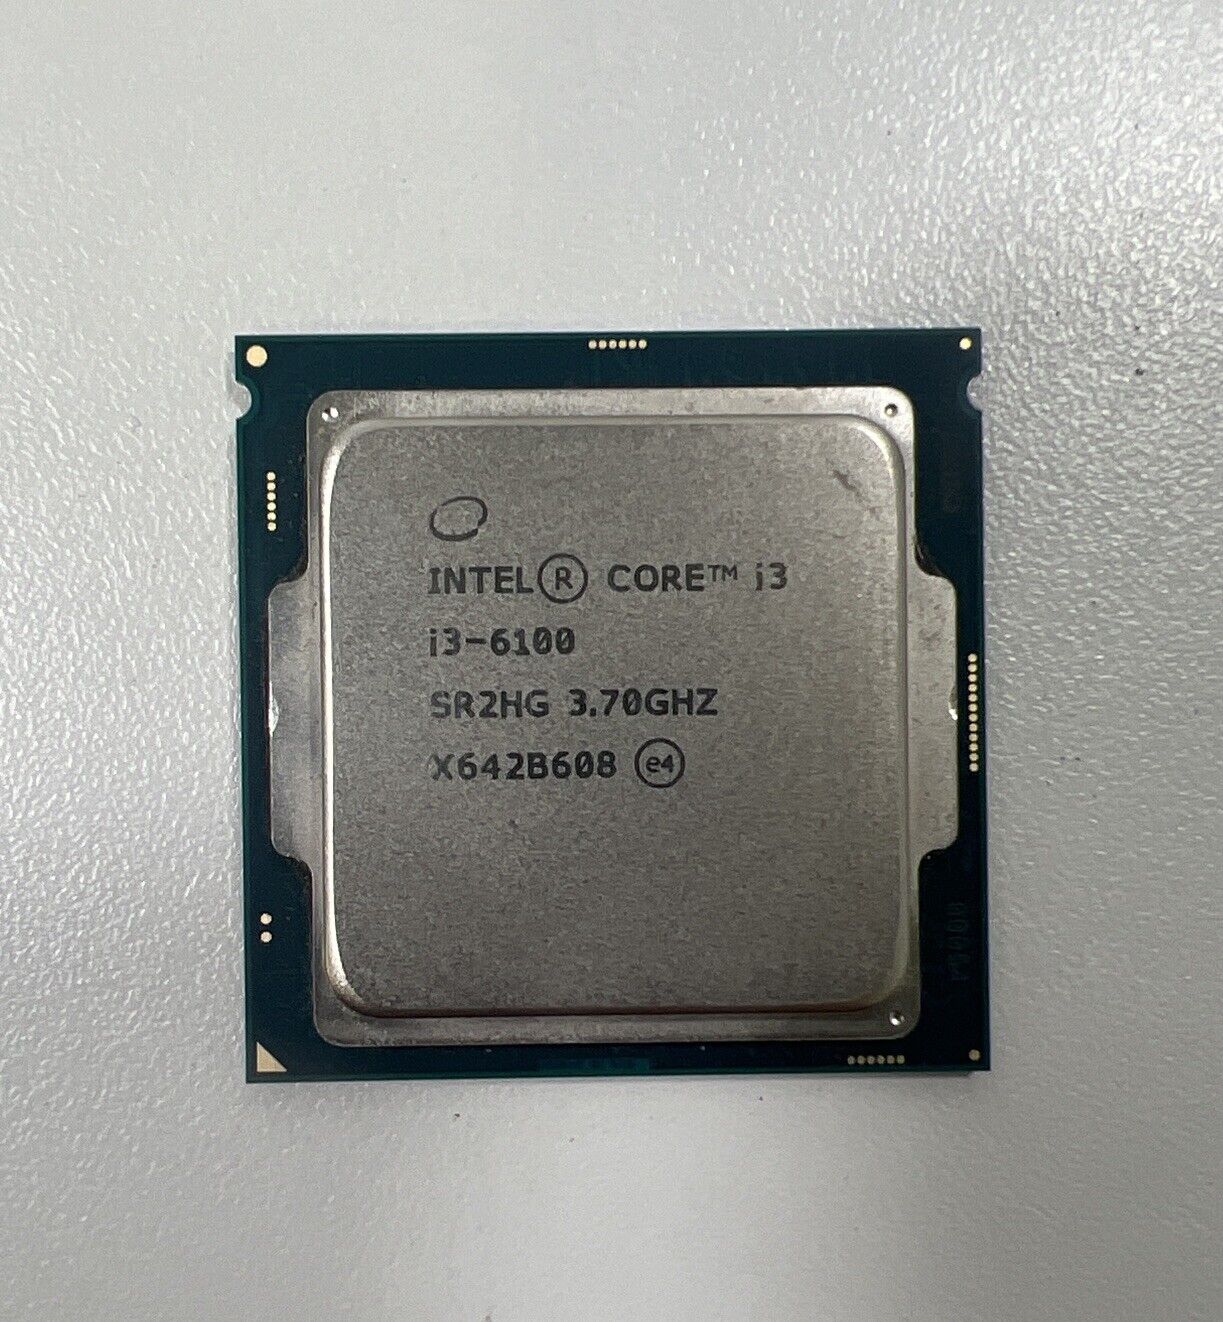 Intel Core i3-6100 3.7 GHz (SR2HG) Processor